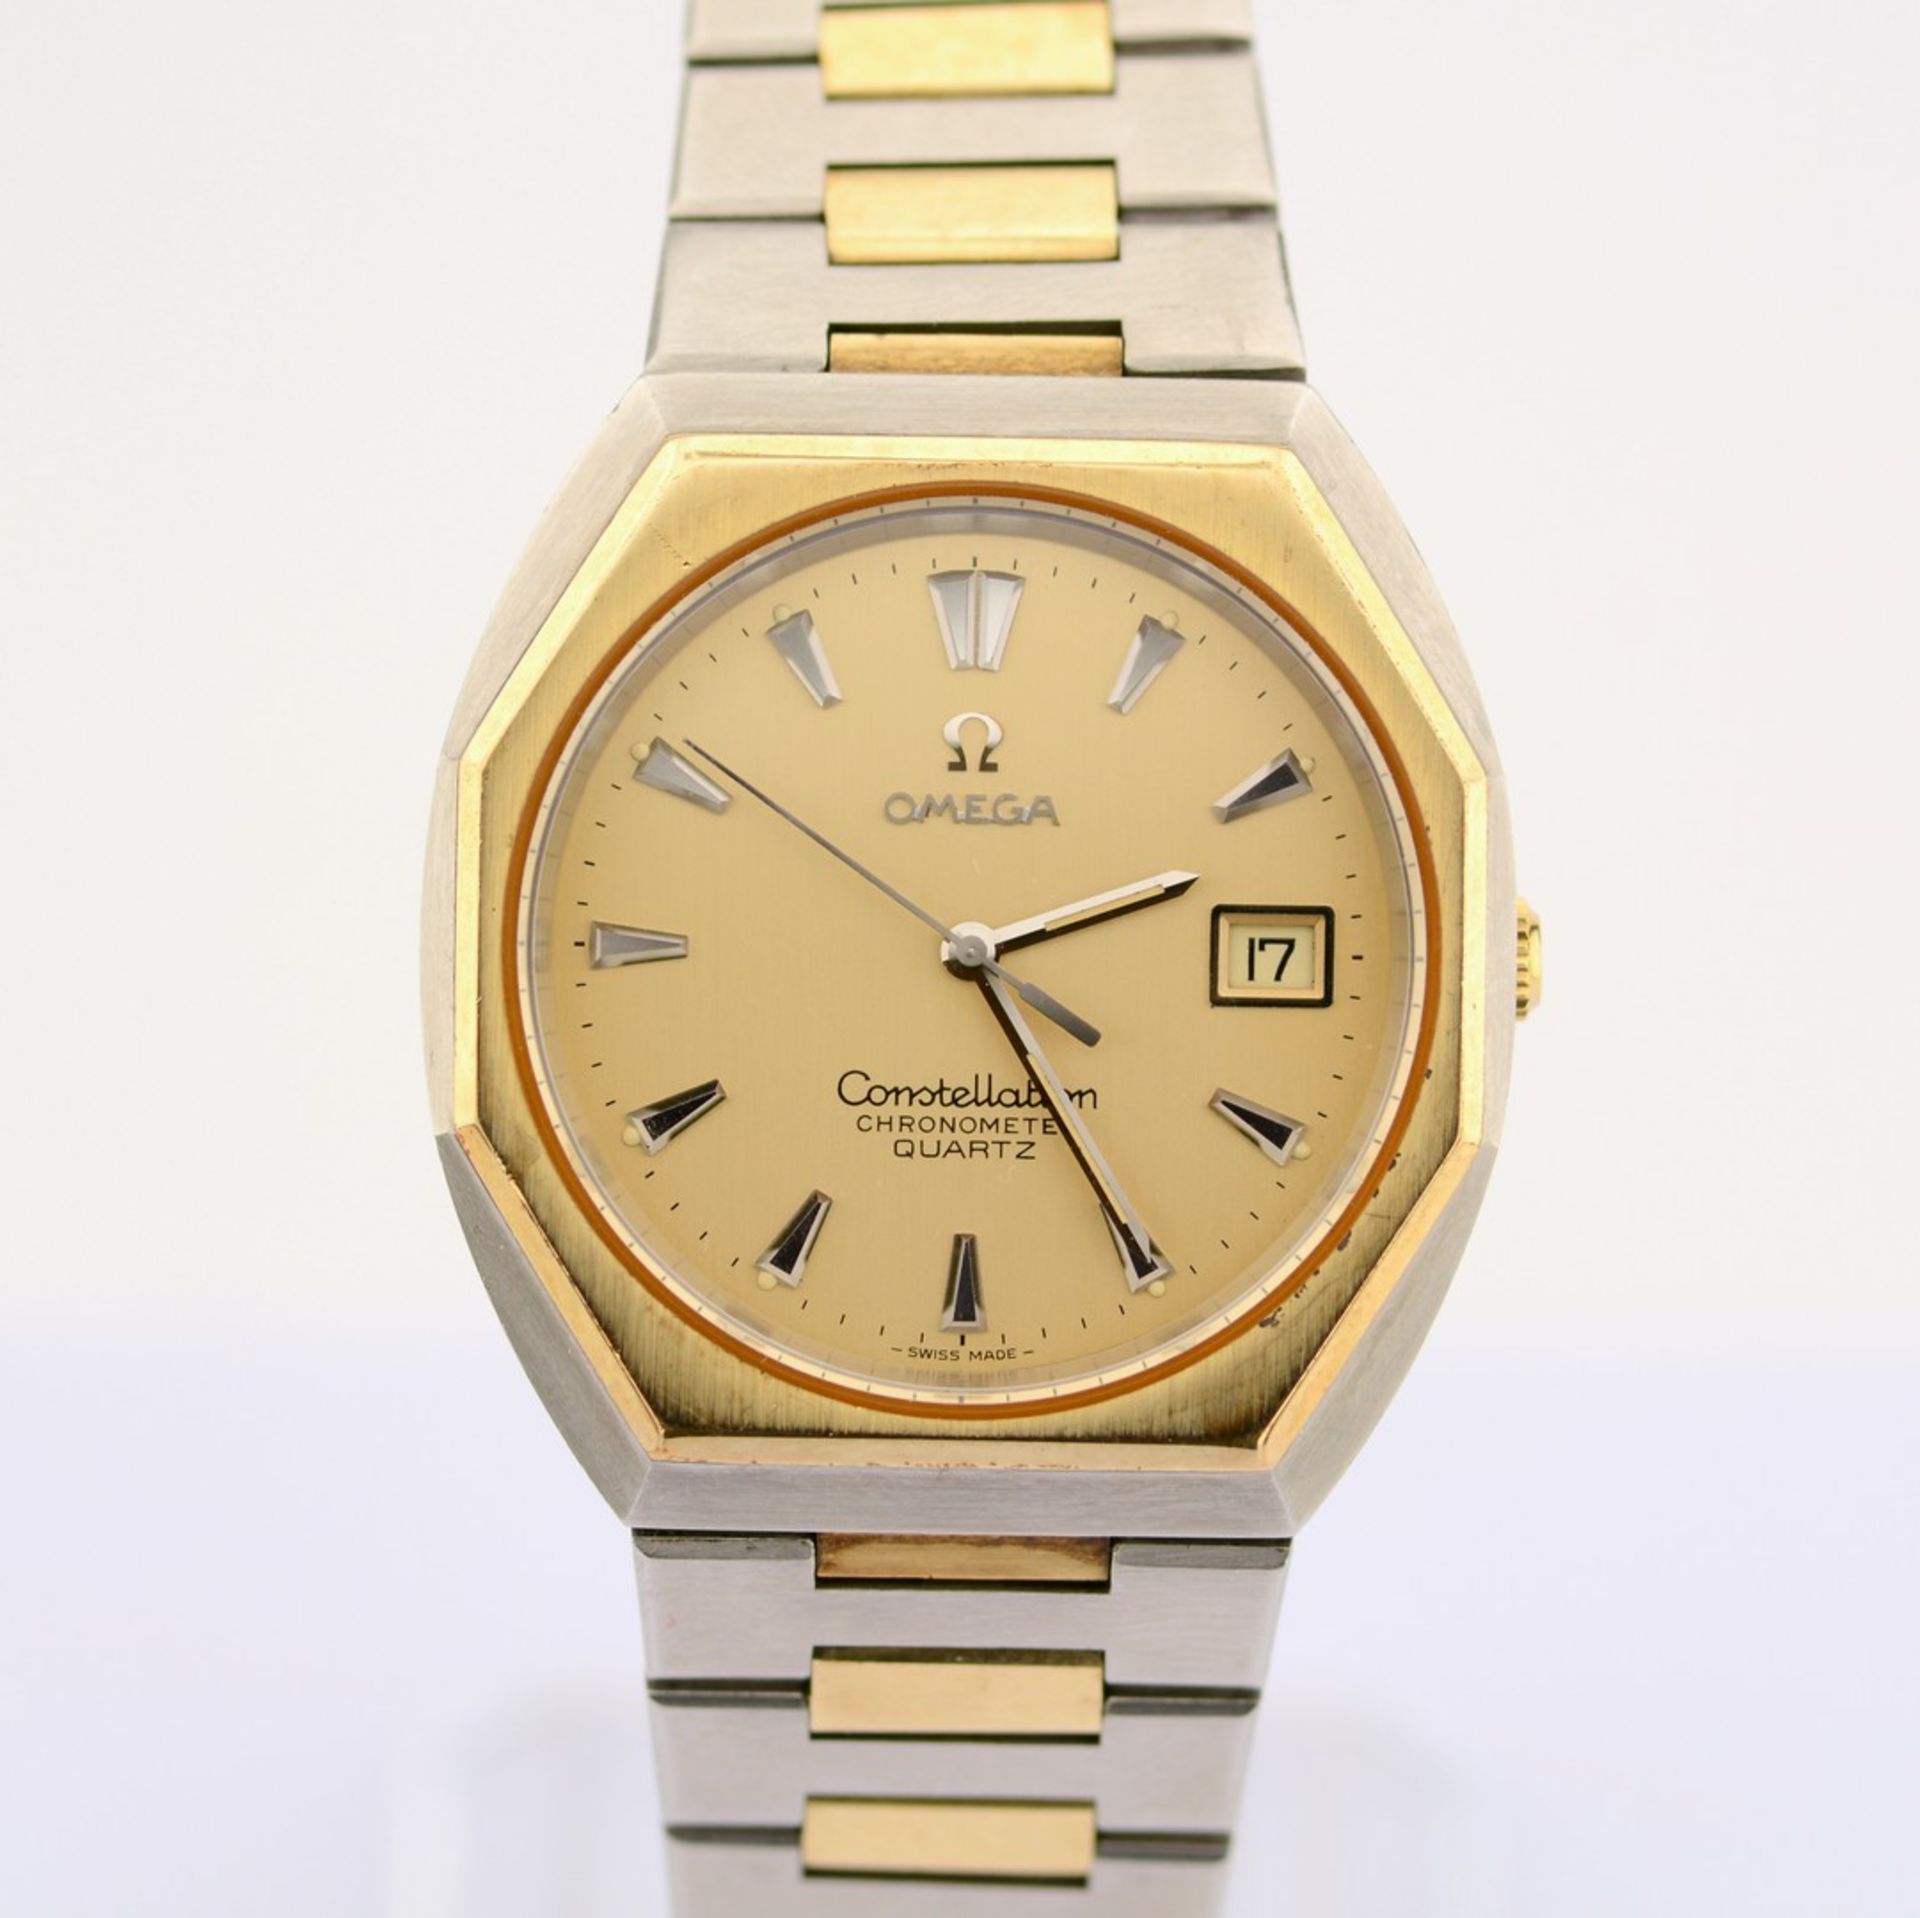 Omega / Constellation Chronometer - Gentlemen's Steel Wristwatch - Image 2 of 7